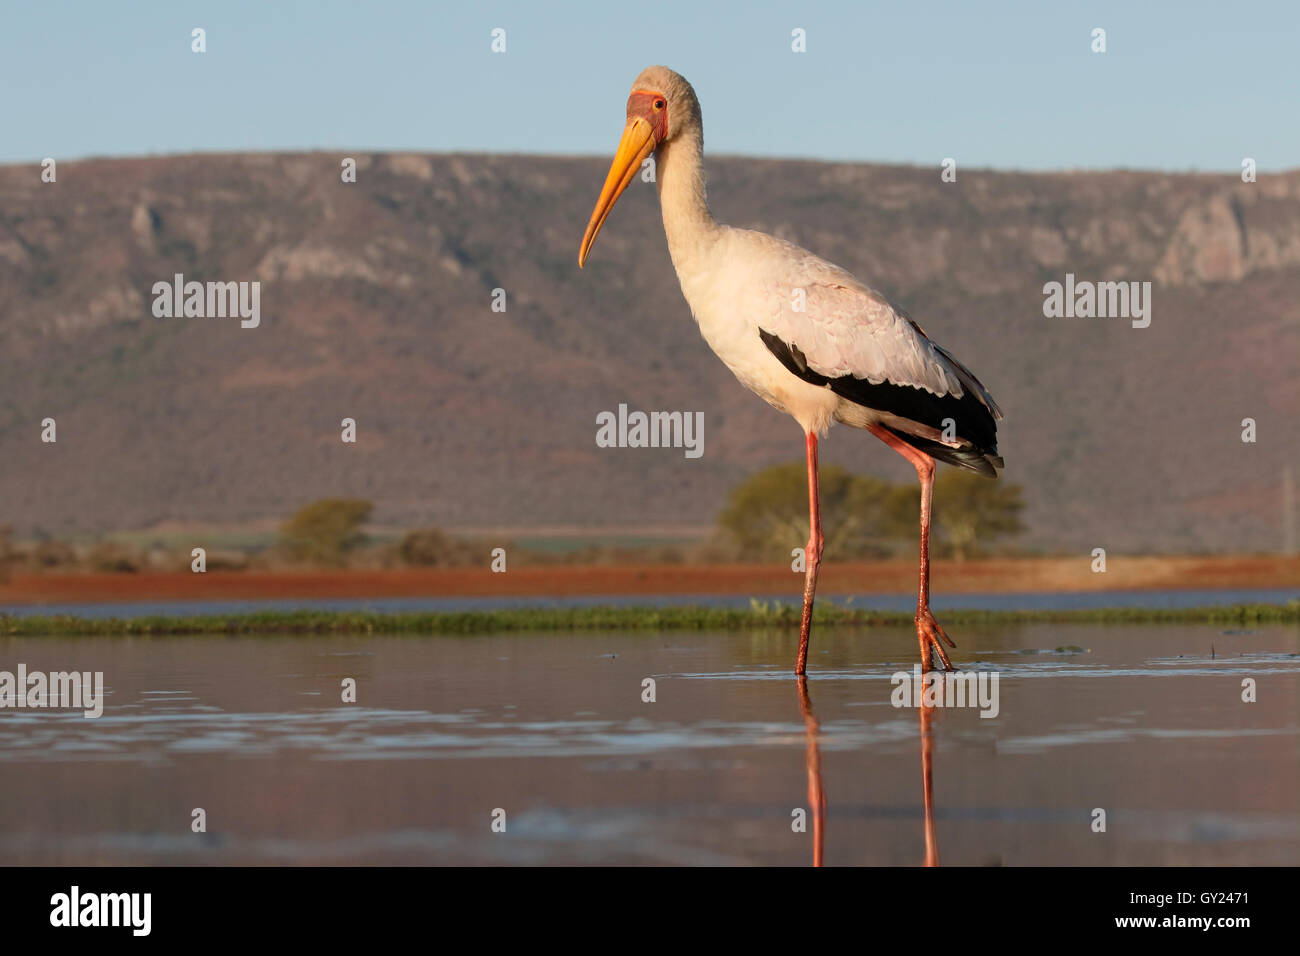 Yellow-billed stork, Mycteria ibis, single bird in water, South Africa, August 2016 Stock Photo